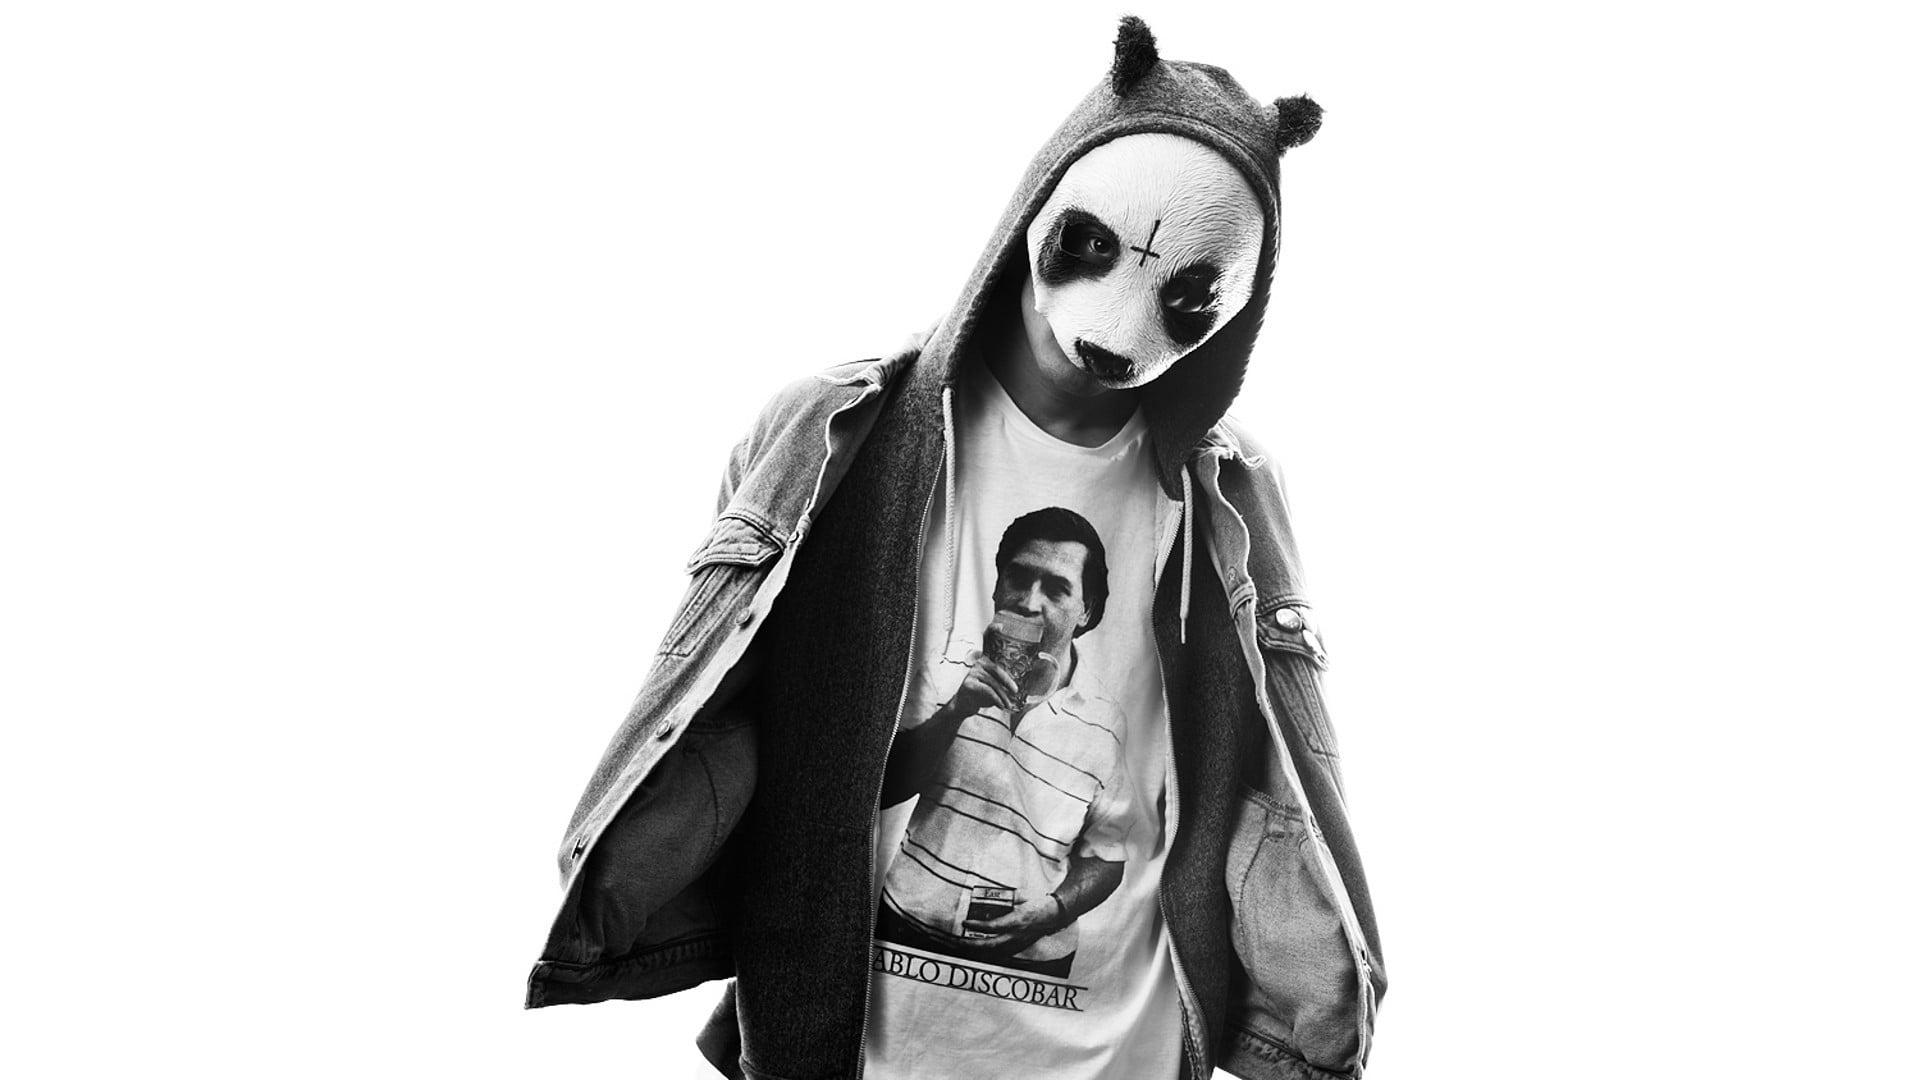 Person Wearing Panda Mask, Hoodie Jacket And White Crew Neck Shirt